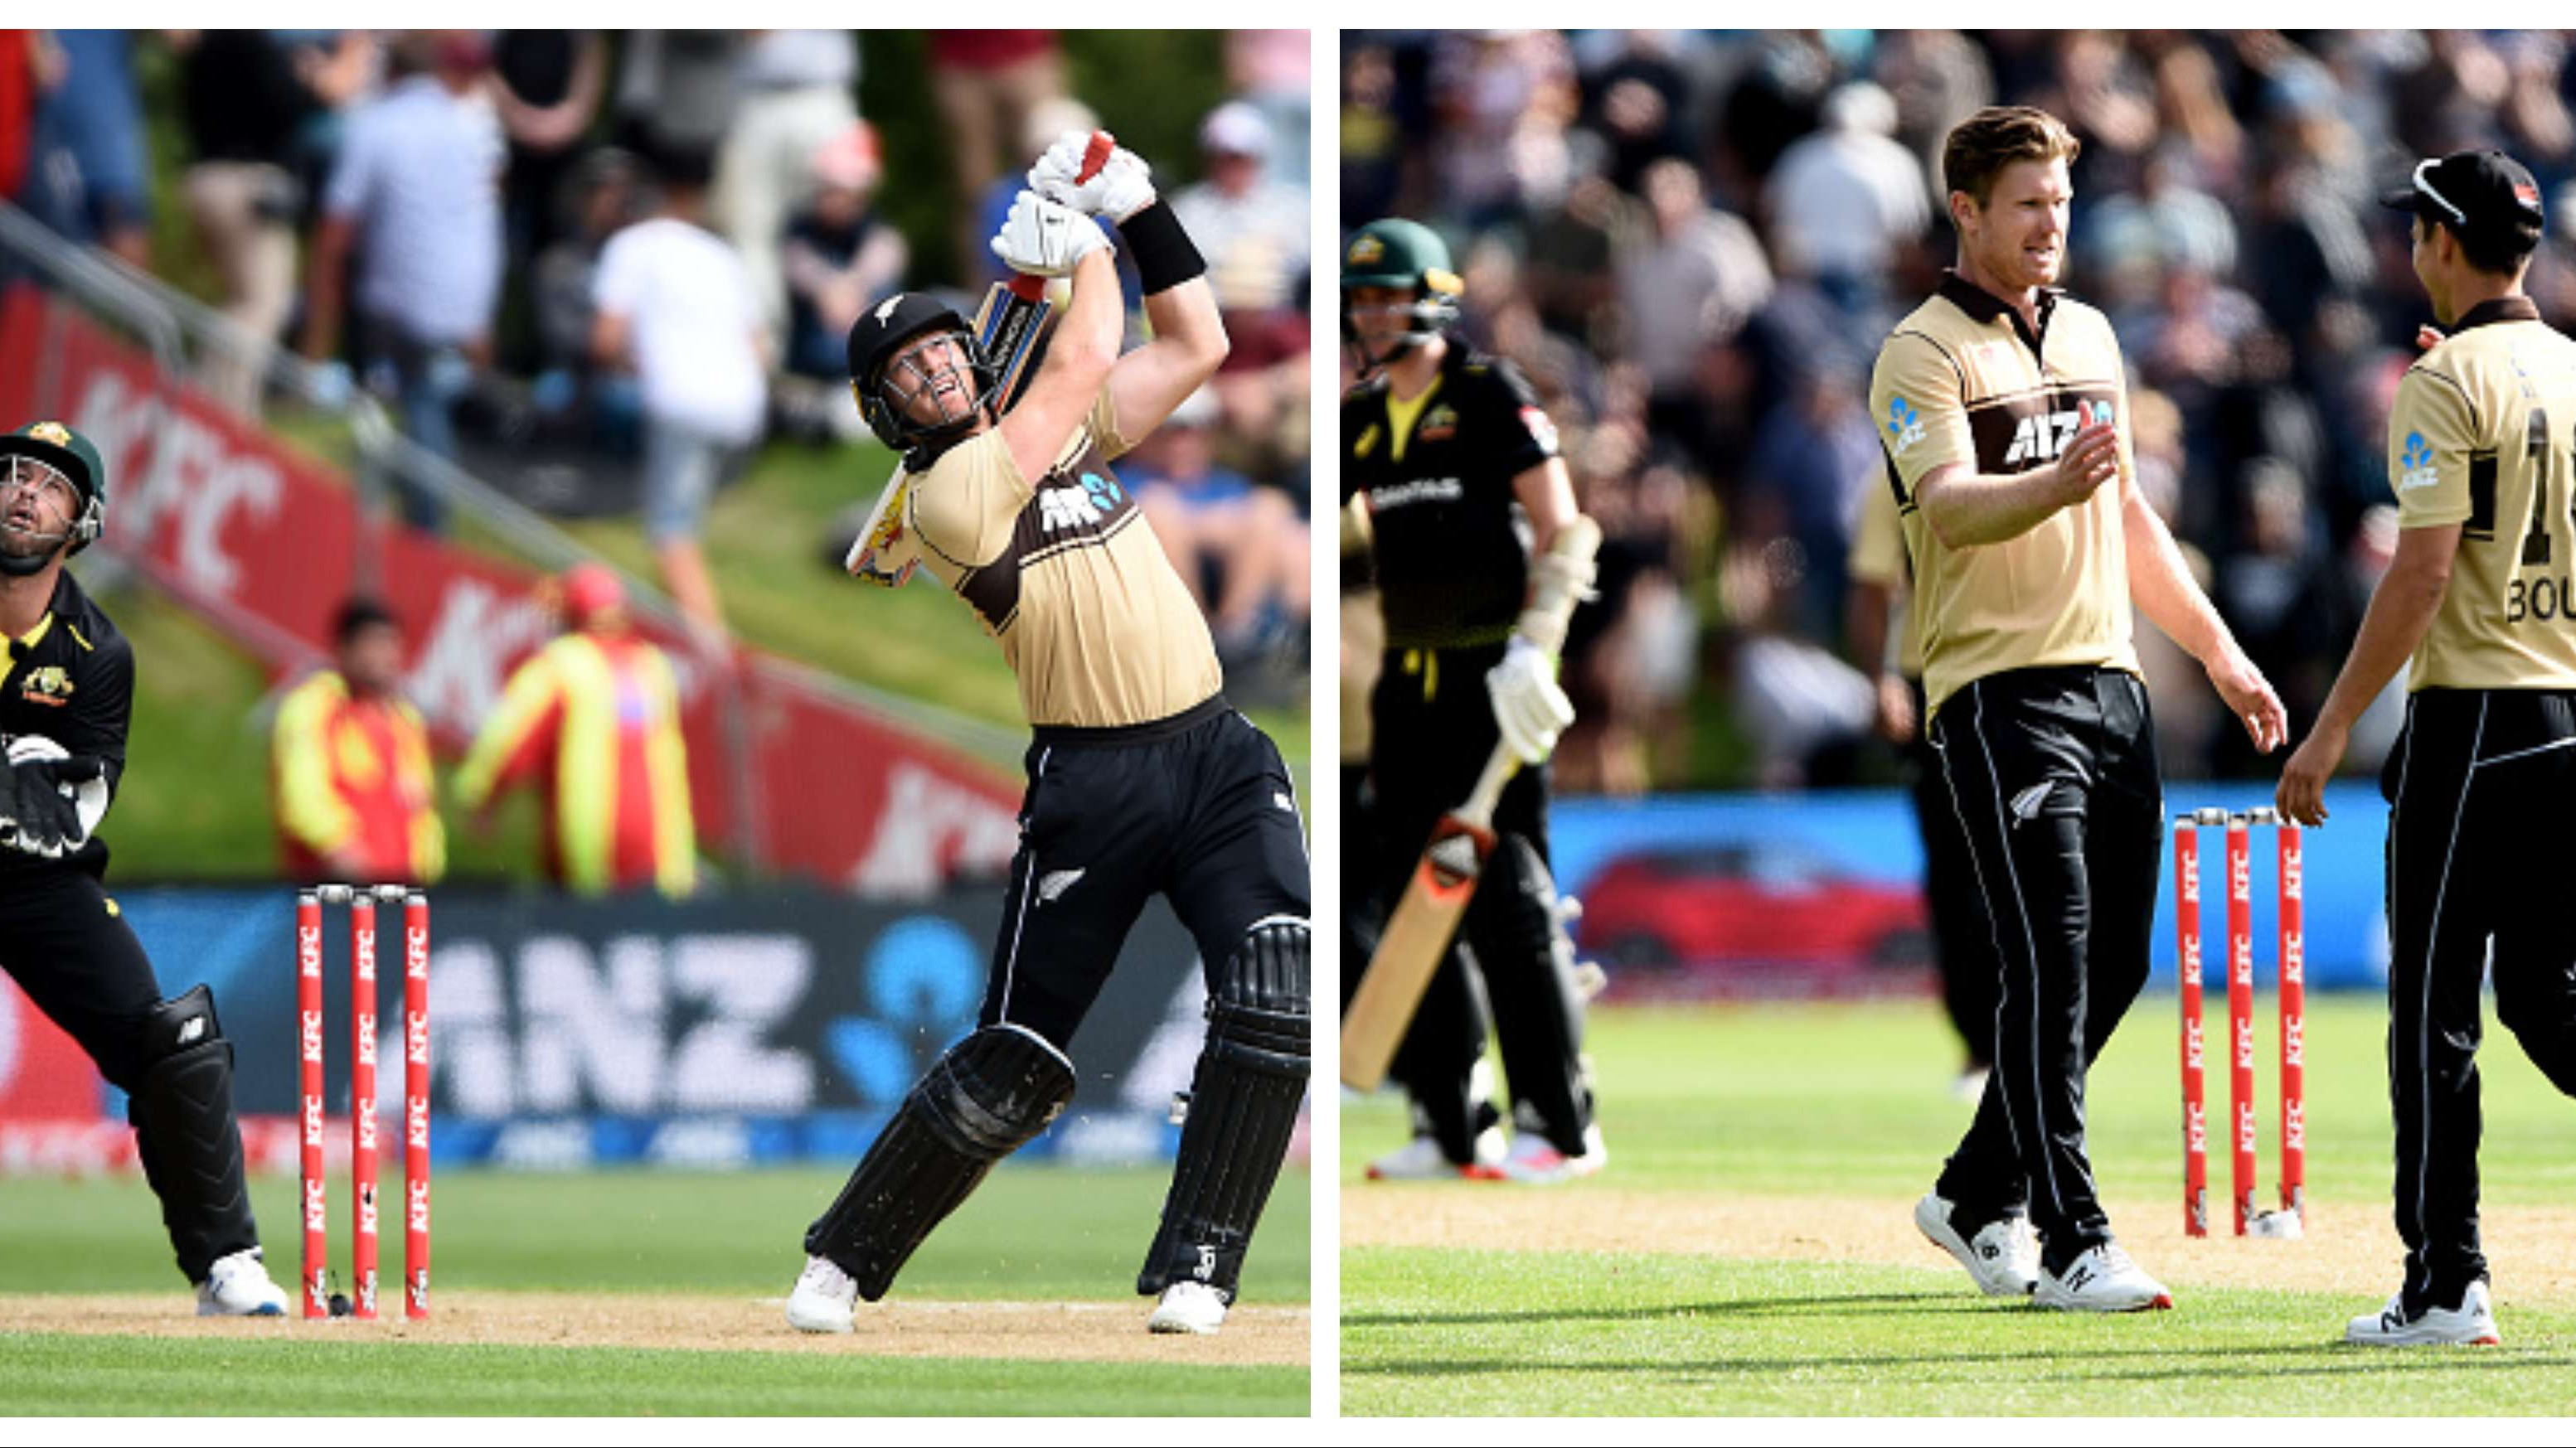 NZ v AUS 2021: Martin Guptill, Jimmy Neesham sparkle in New Zealand’s thrilling win over Australia in 2nd T20I